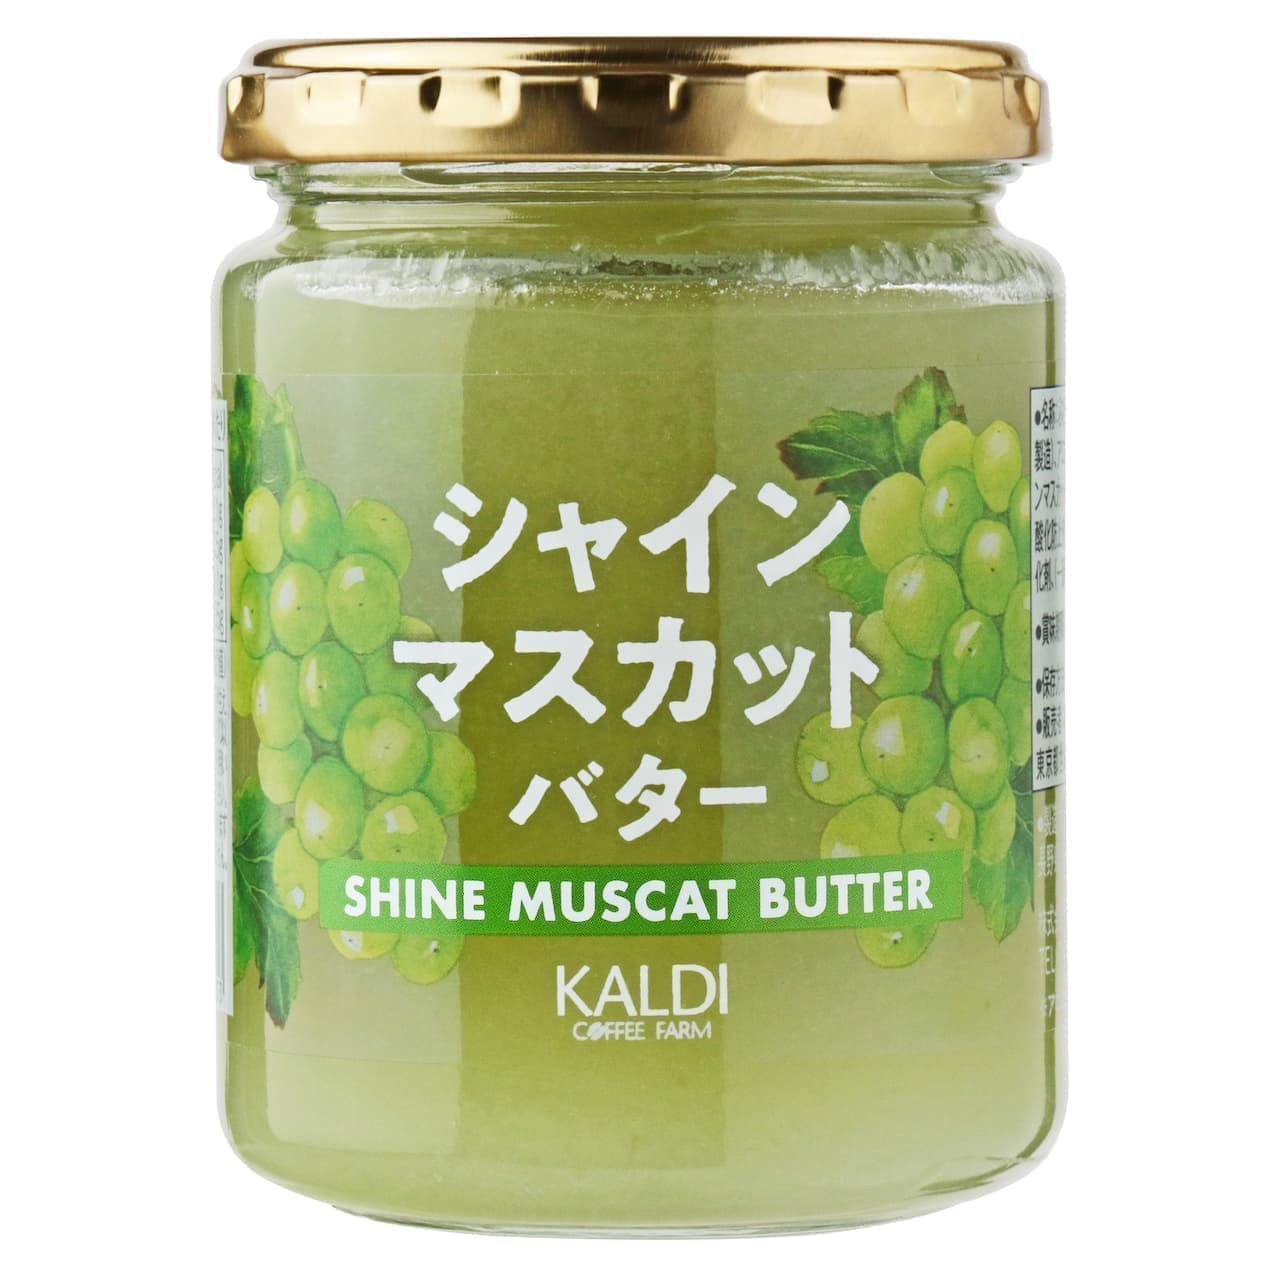 KALDI "Original Shine Muscat Butter"